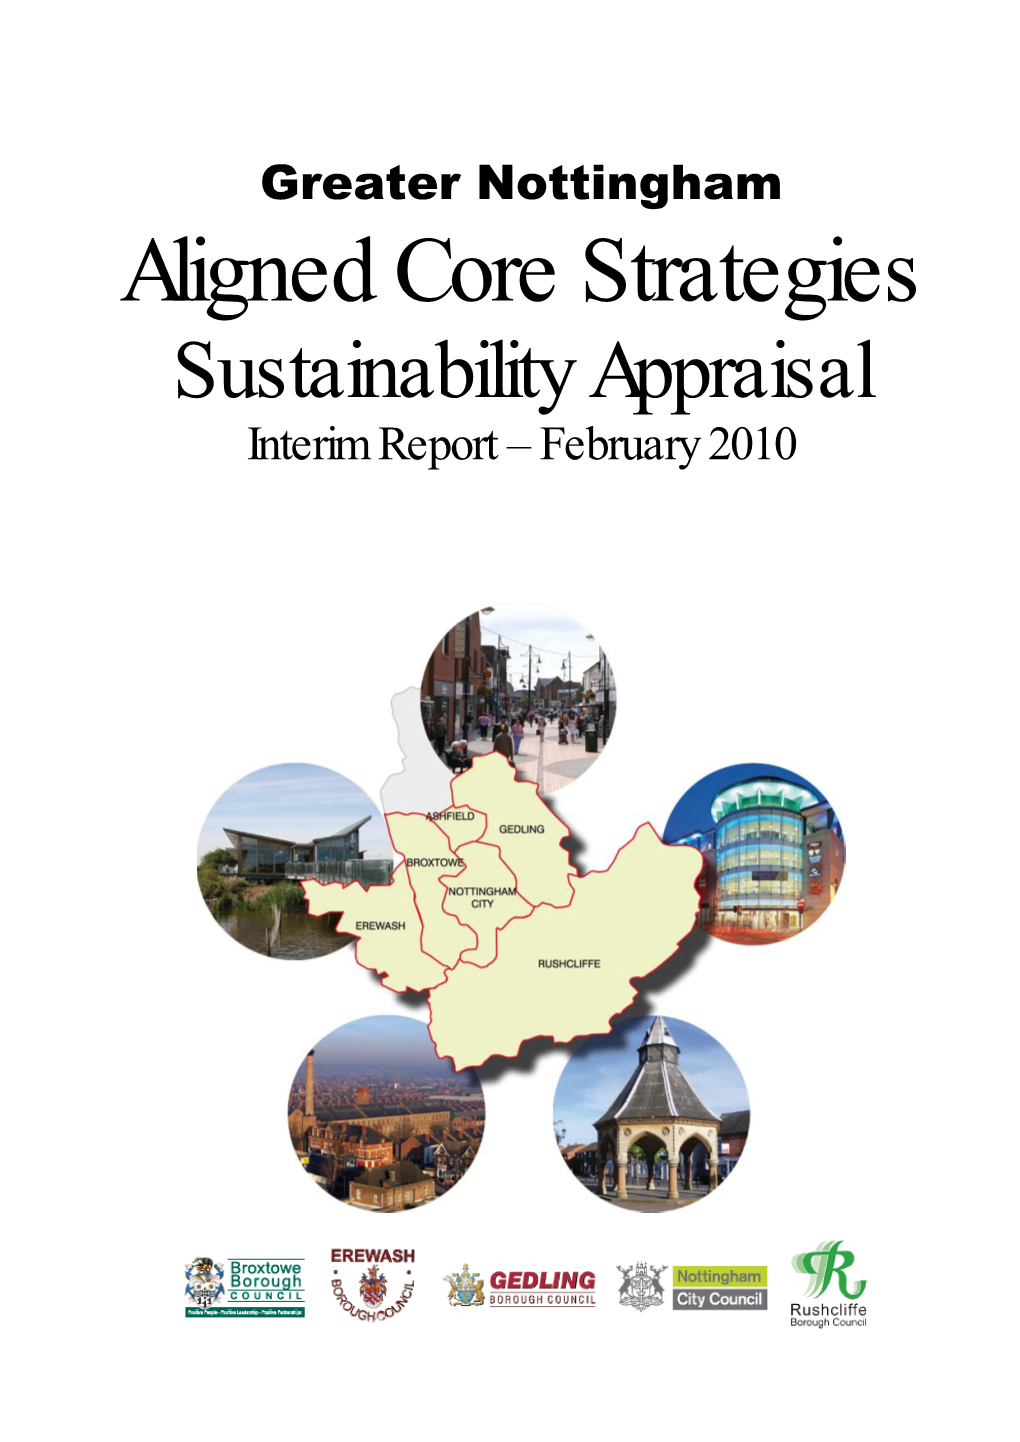 Greater Nottingham Aligned Core Strategies Sustainability Appraisal Interim Report – February 2010